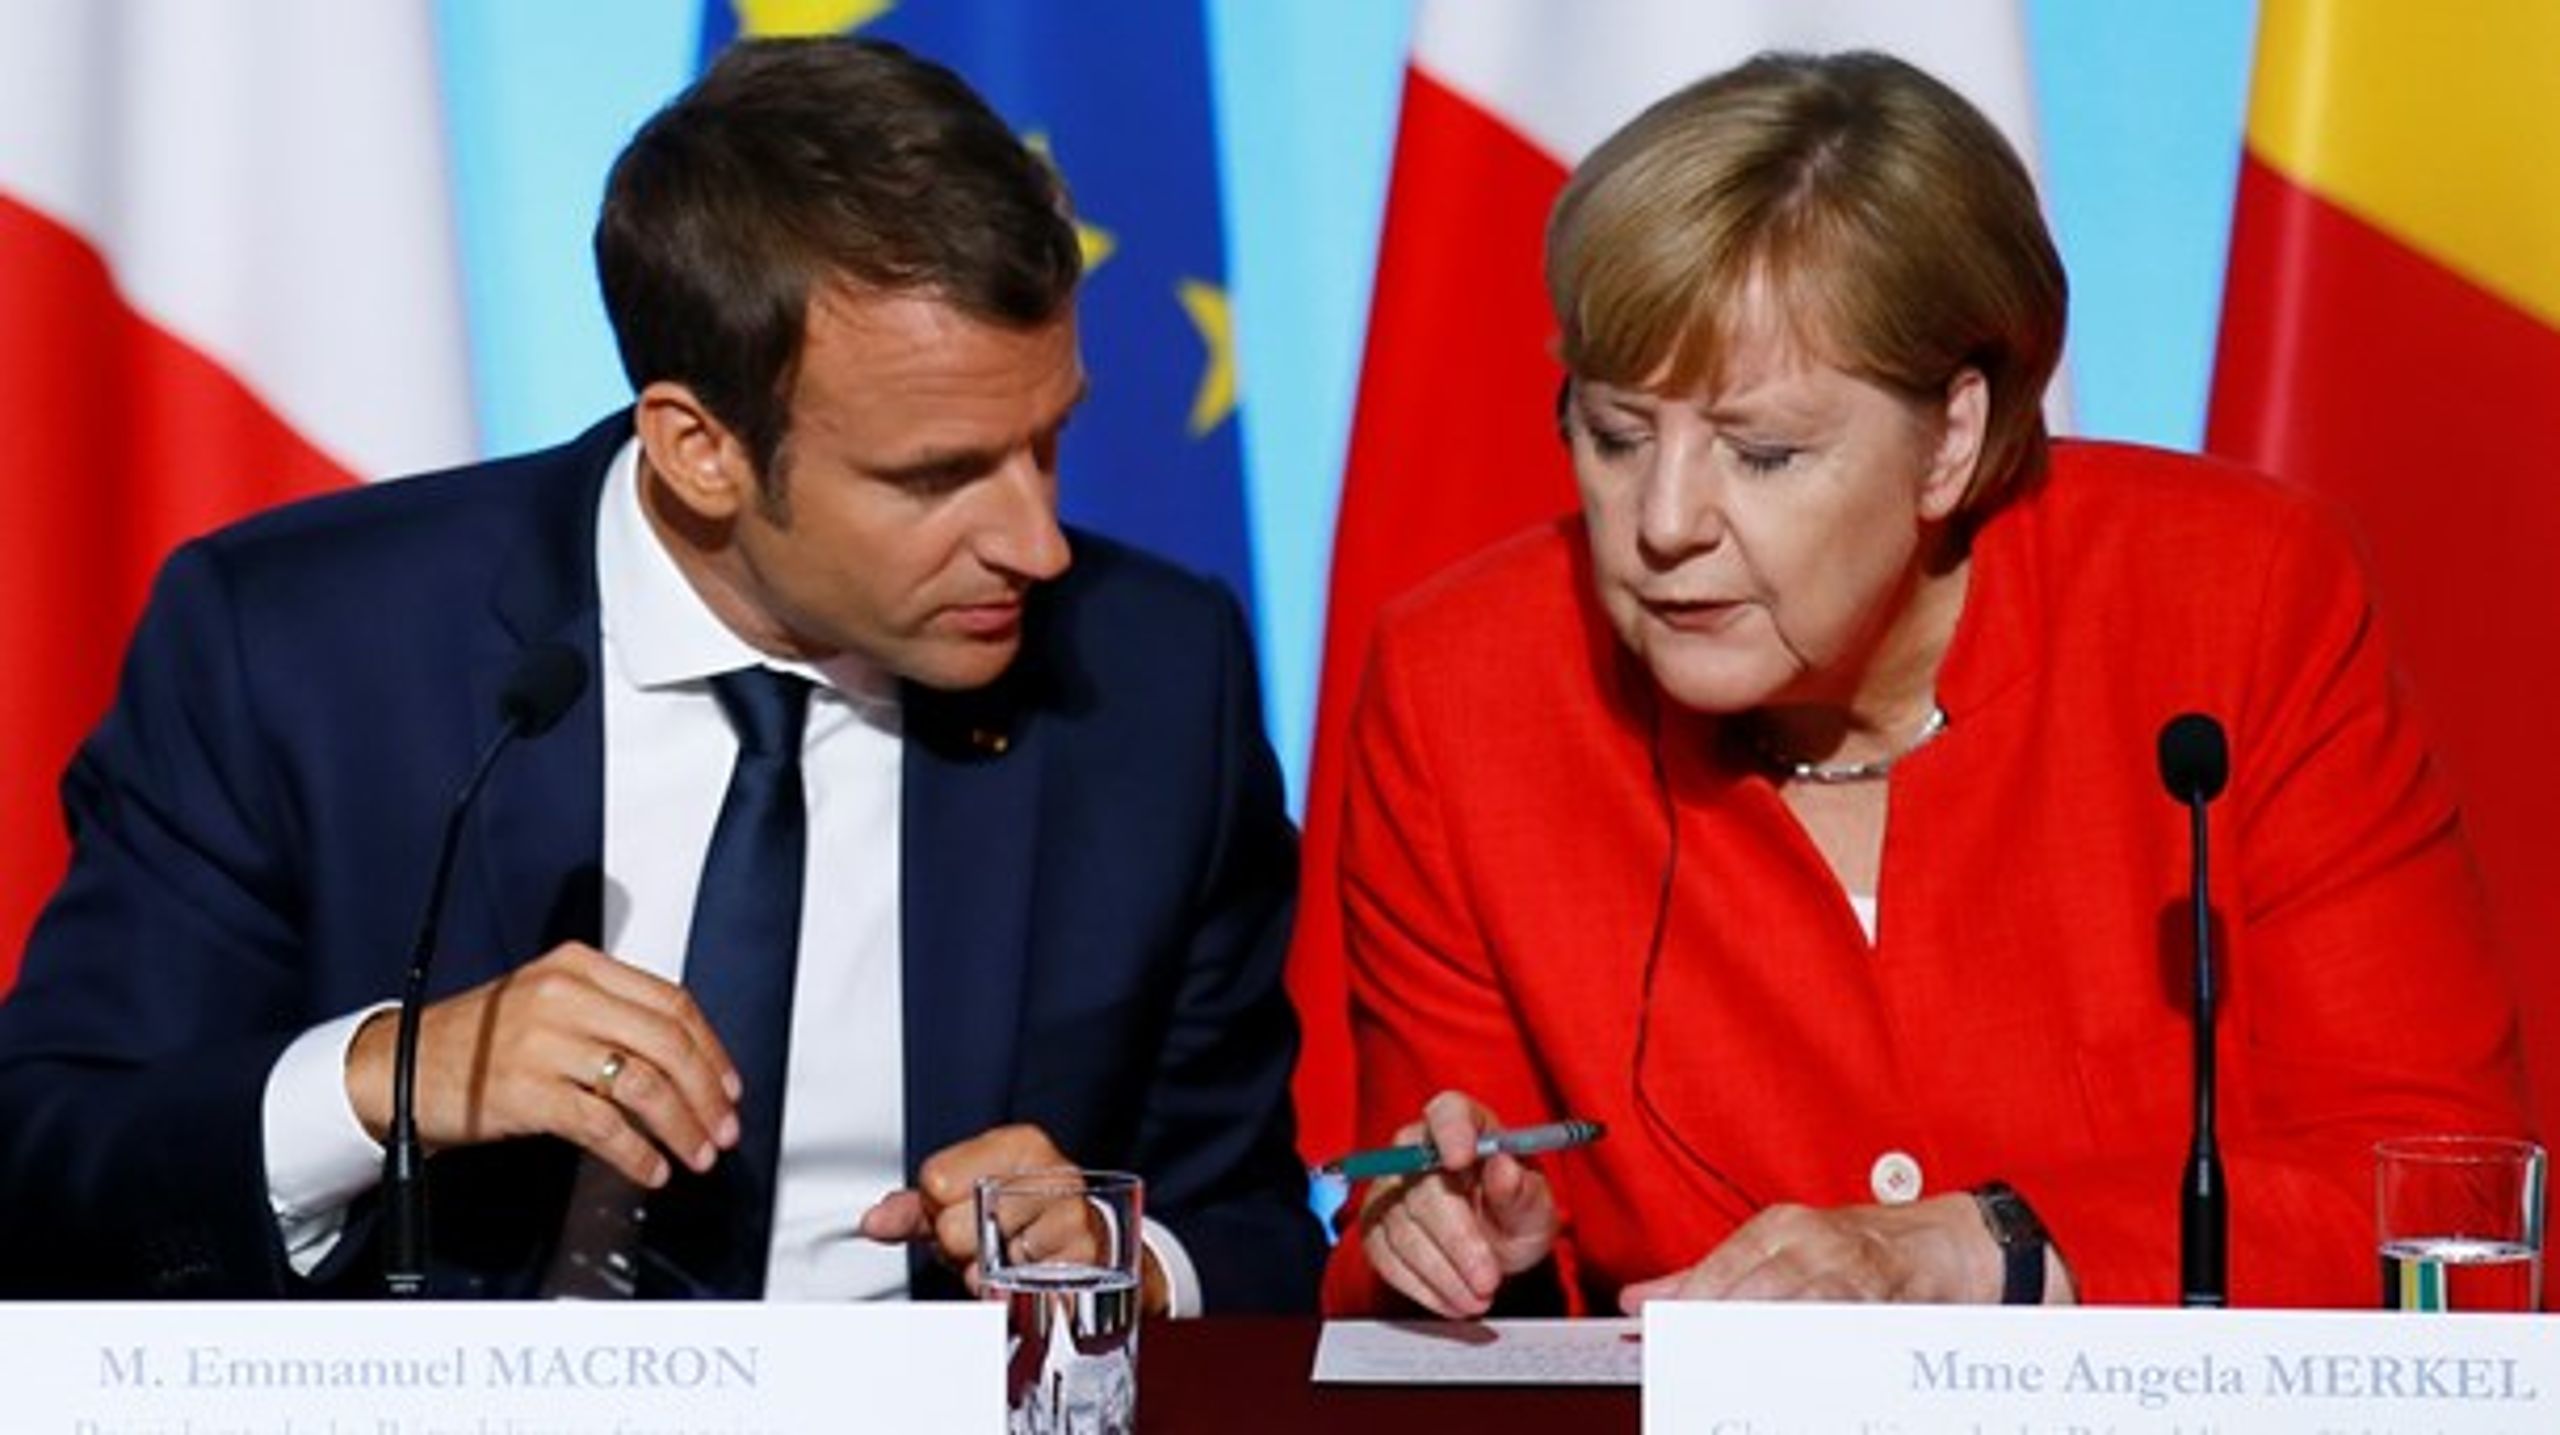 Merkels nye regering kan blive en stor&nbsp;prøvelse for EU og den tysk-franske alliance, skriver Lukas Lausen.